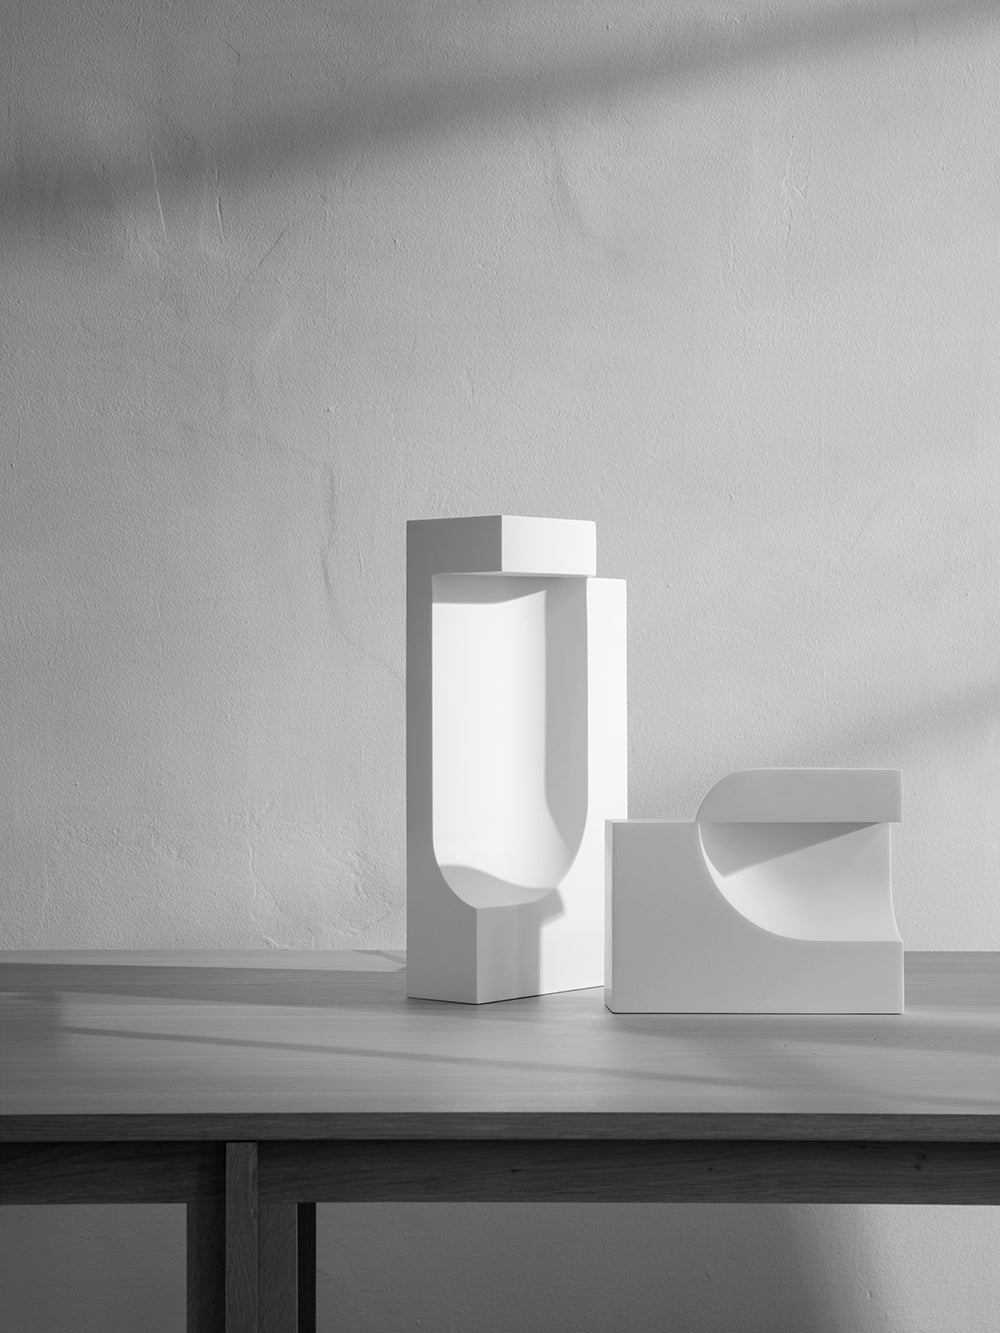 Moby 2 designed by Birgitte Due Madsen,Jonas Trampedach, 2015